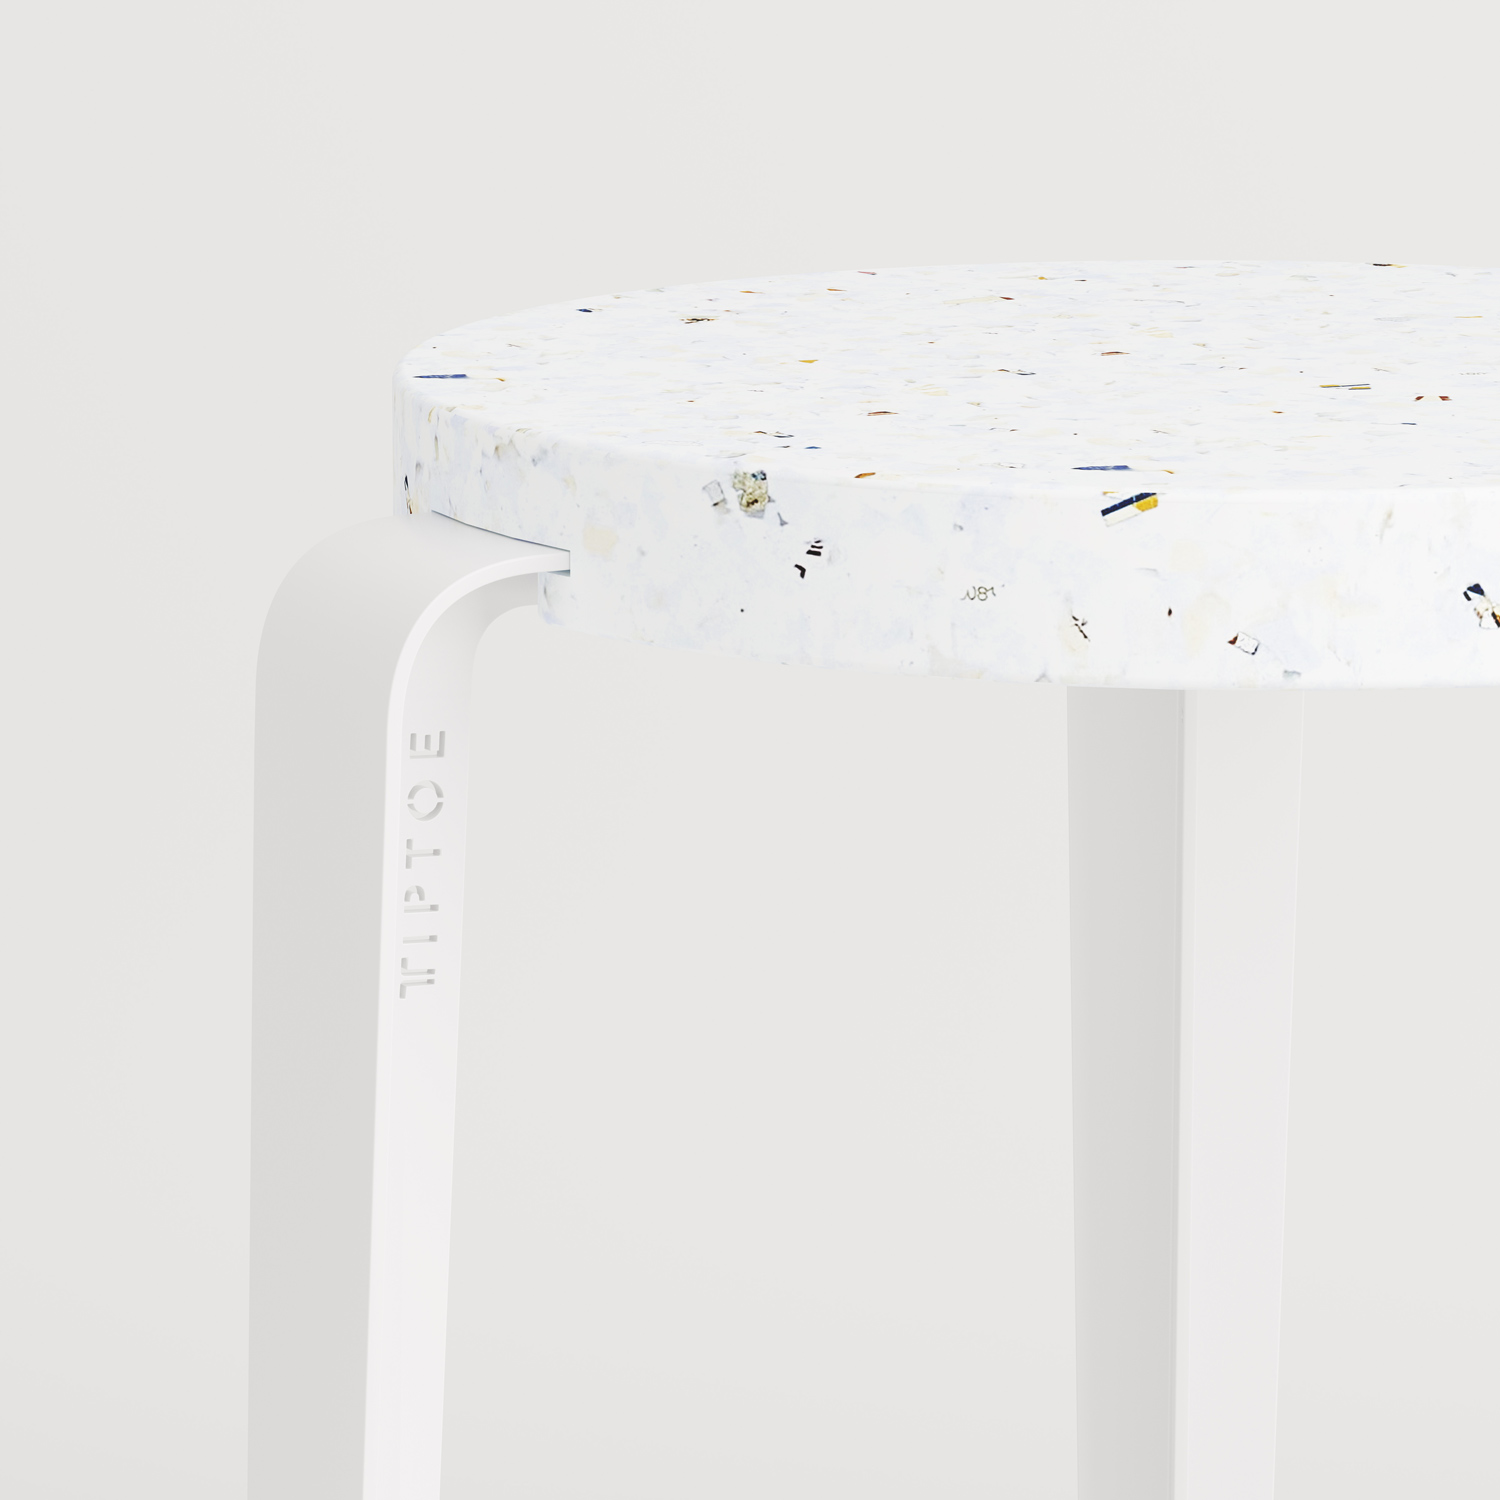 MI LOU counter stool in recycled plastic VENEZIA